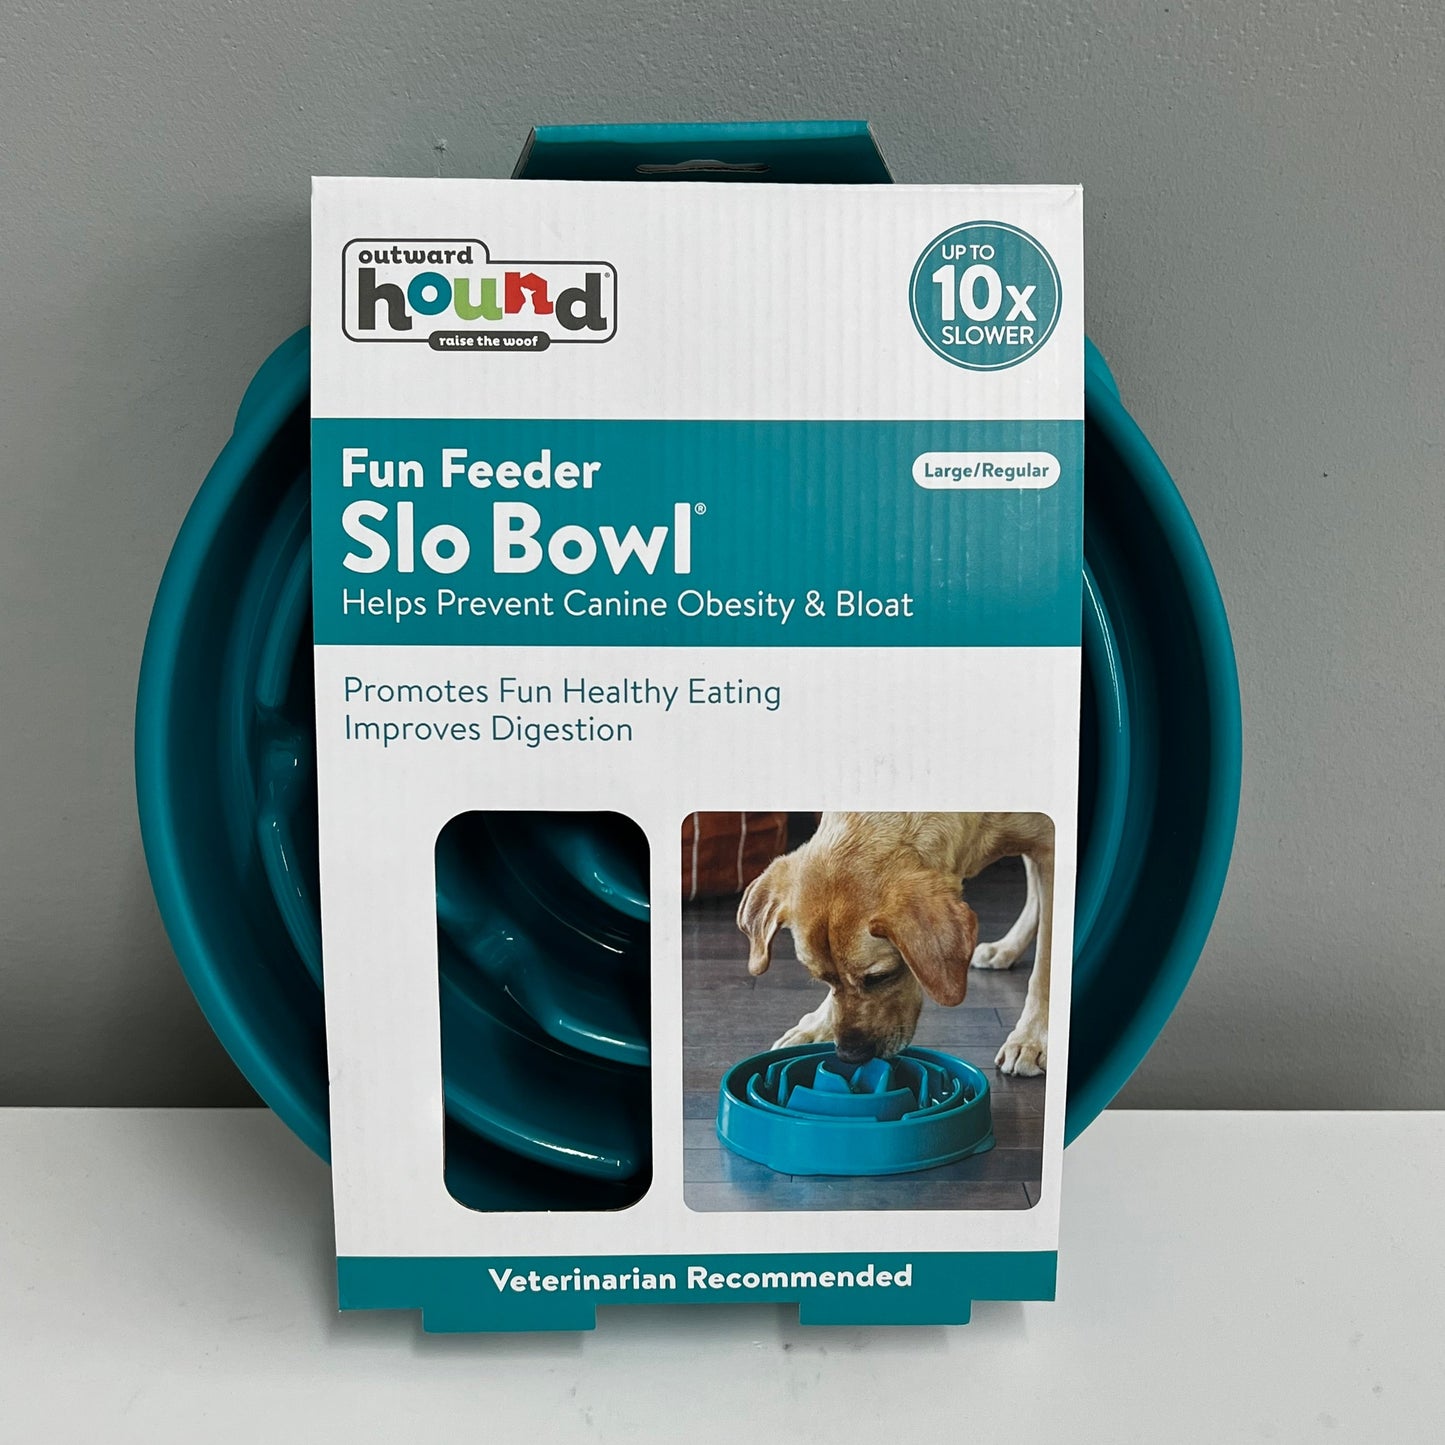 Outward Hound Fun Feeder Slo Bowl- Large (4 cup)